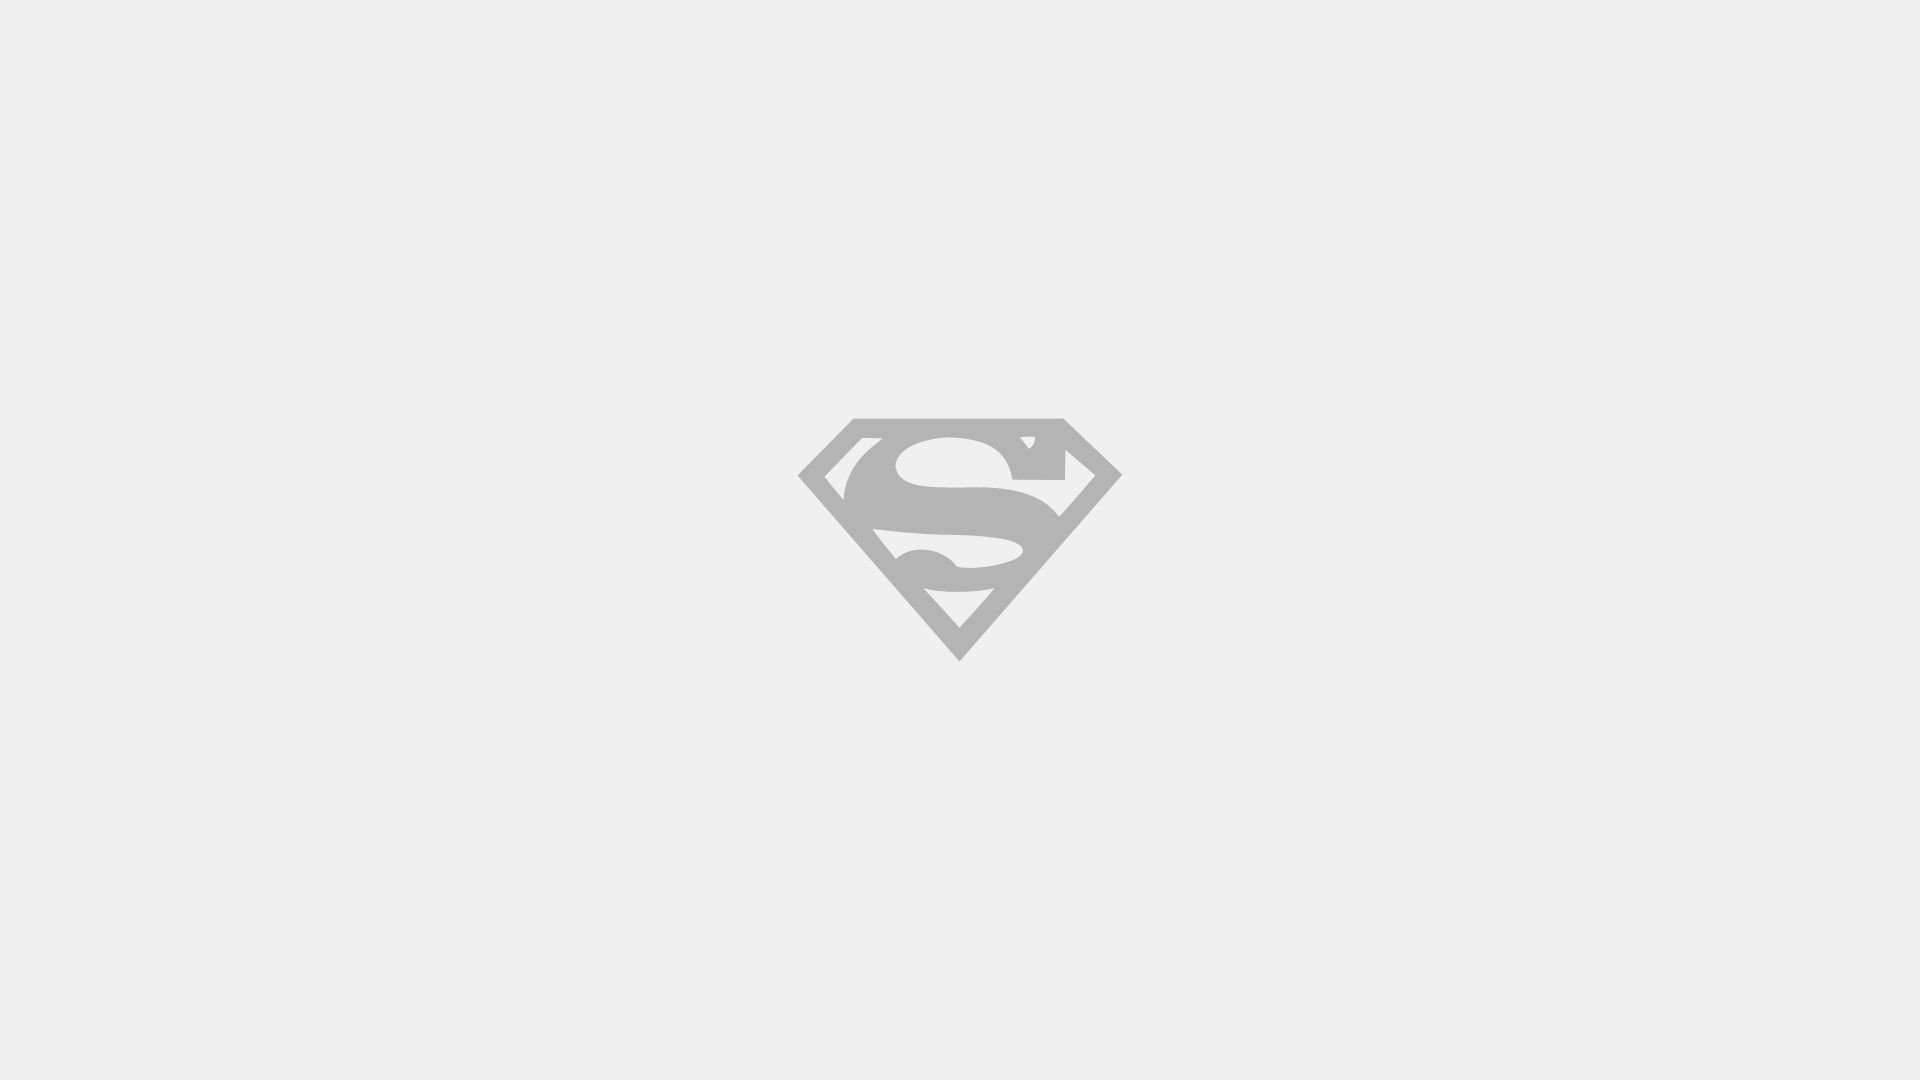 1920x1080 Logos Minimalistic Superman Logo